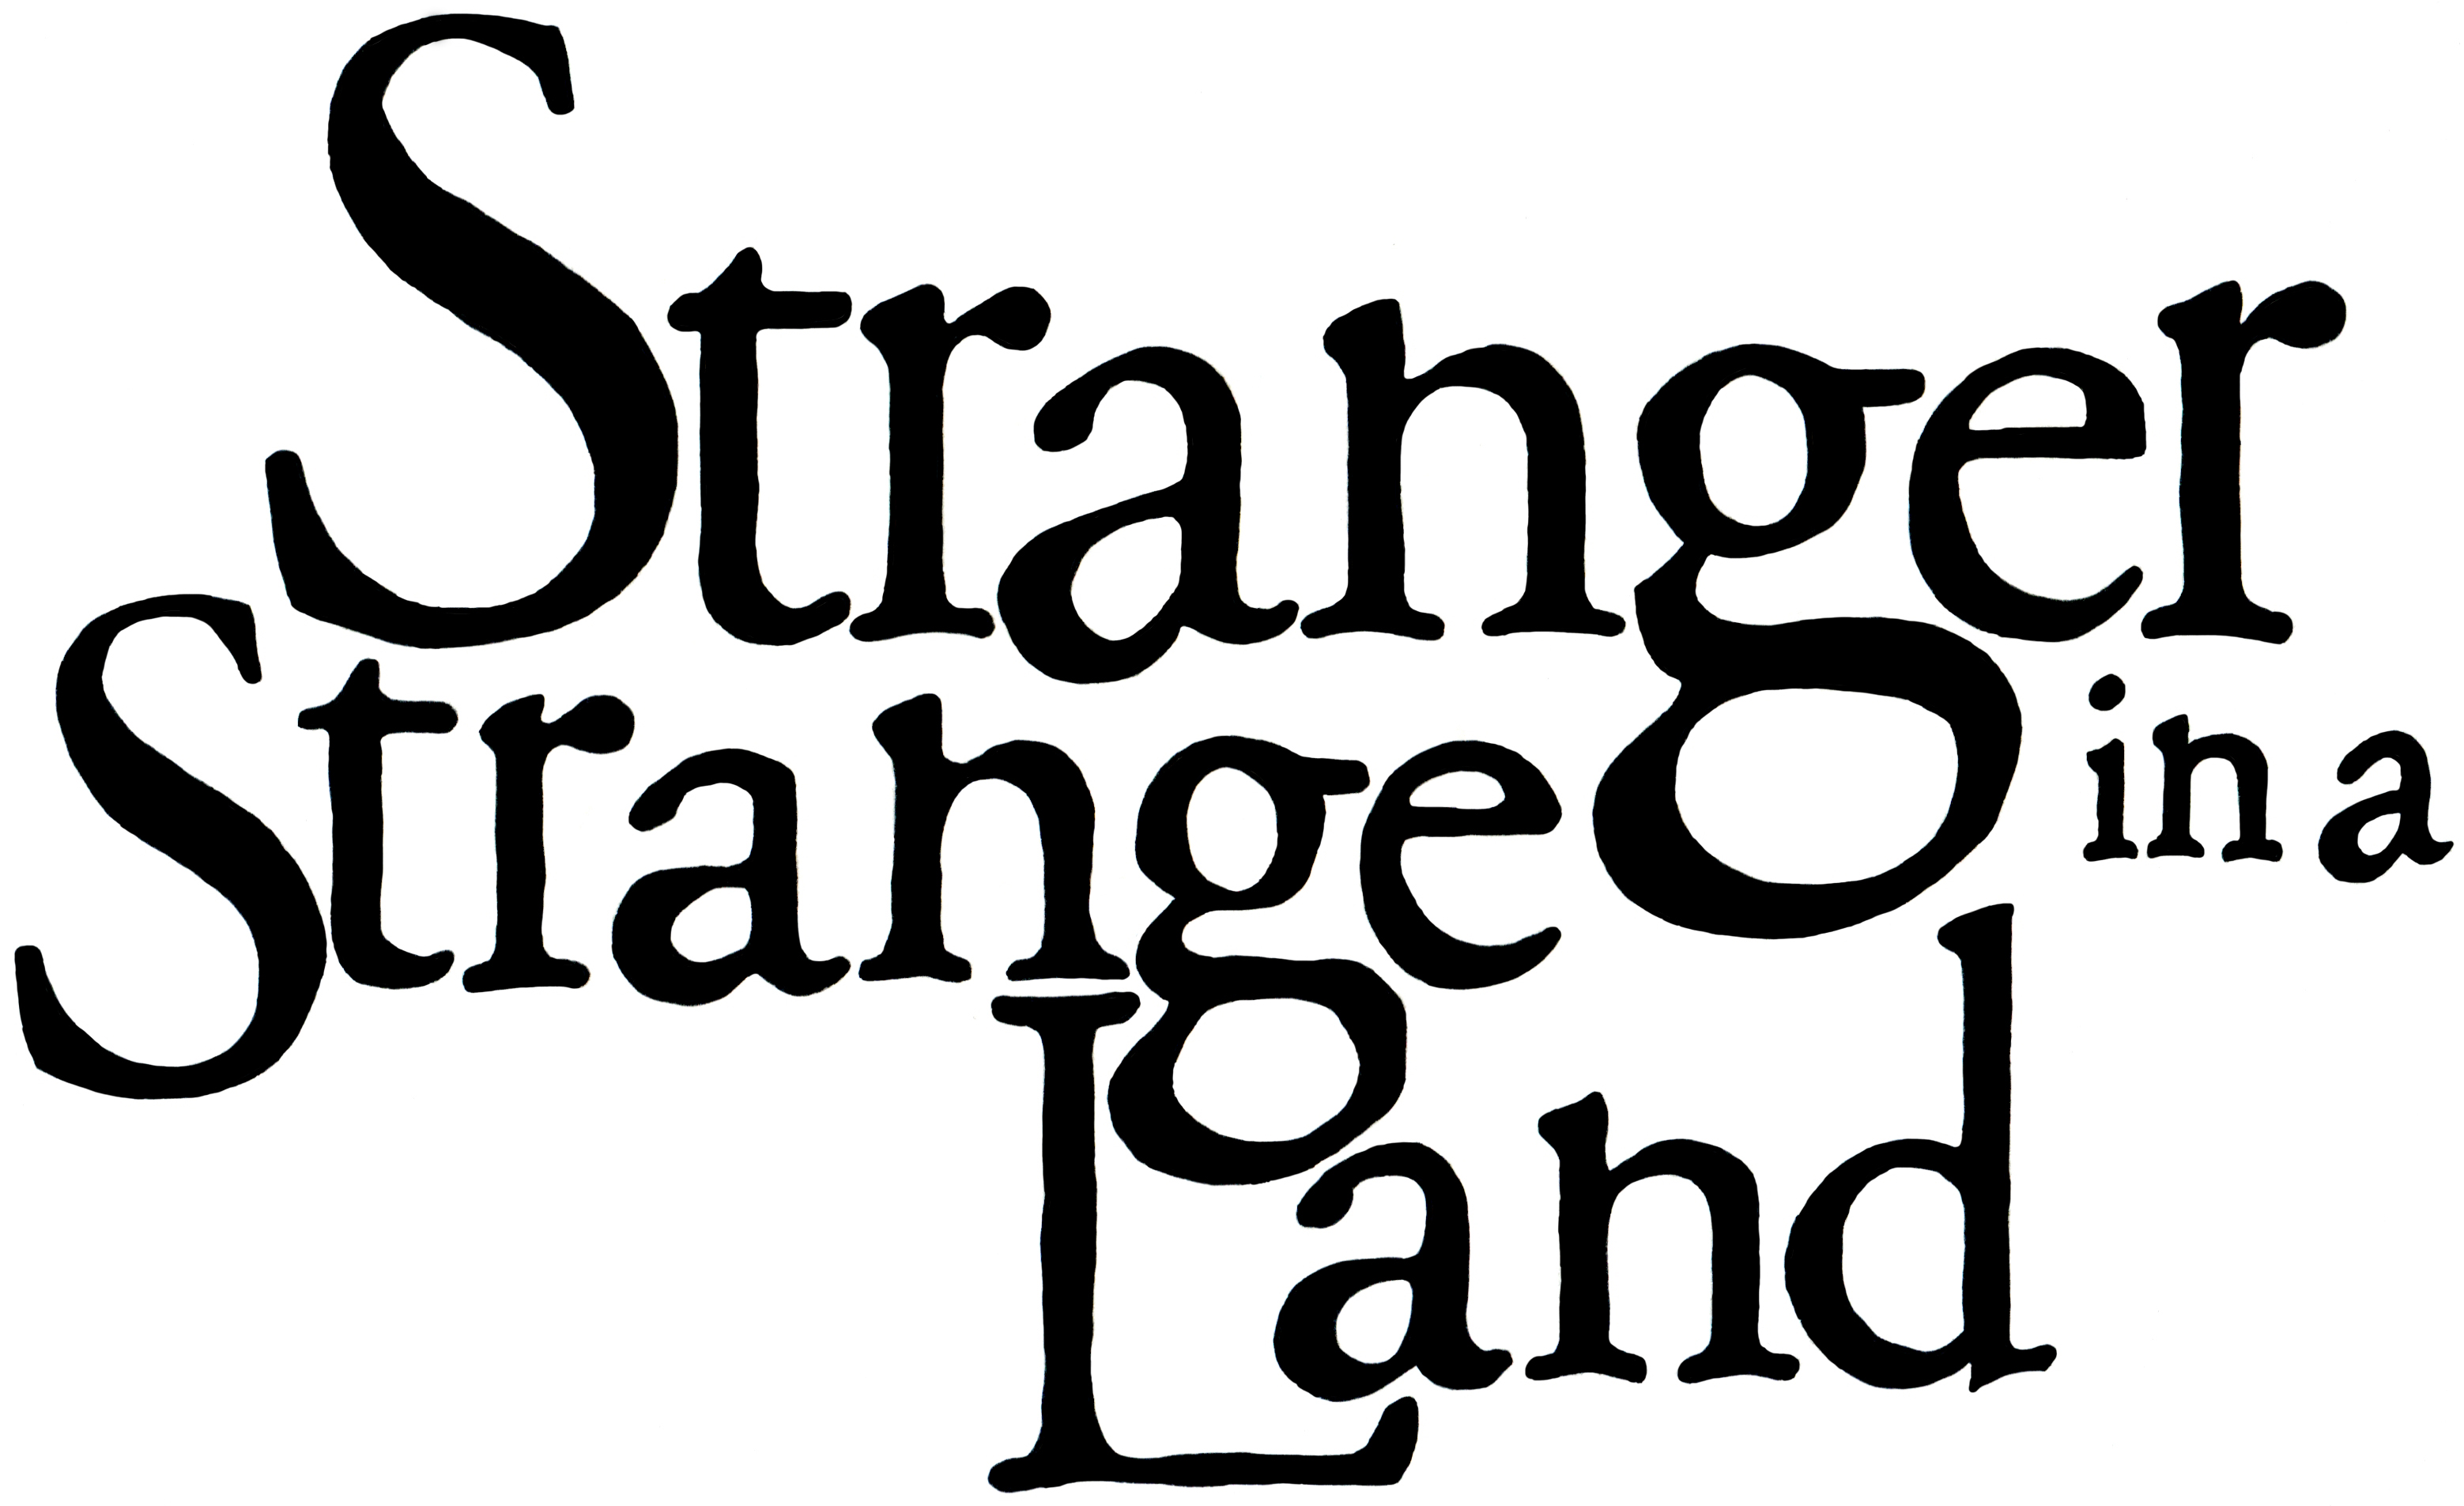 Rustic Hand Lettered Treament for 'Stranger in a Strange Land'